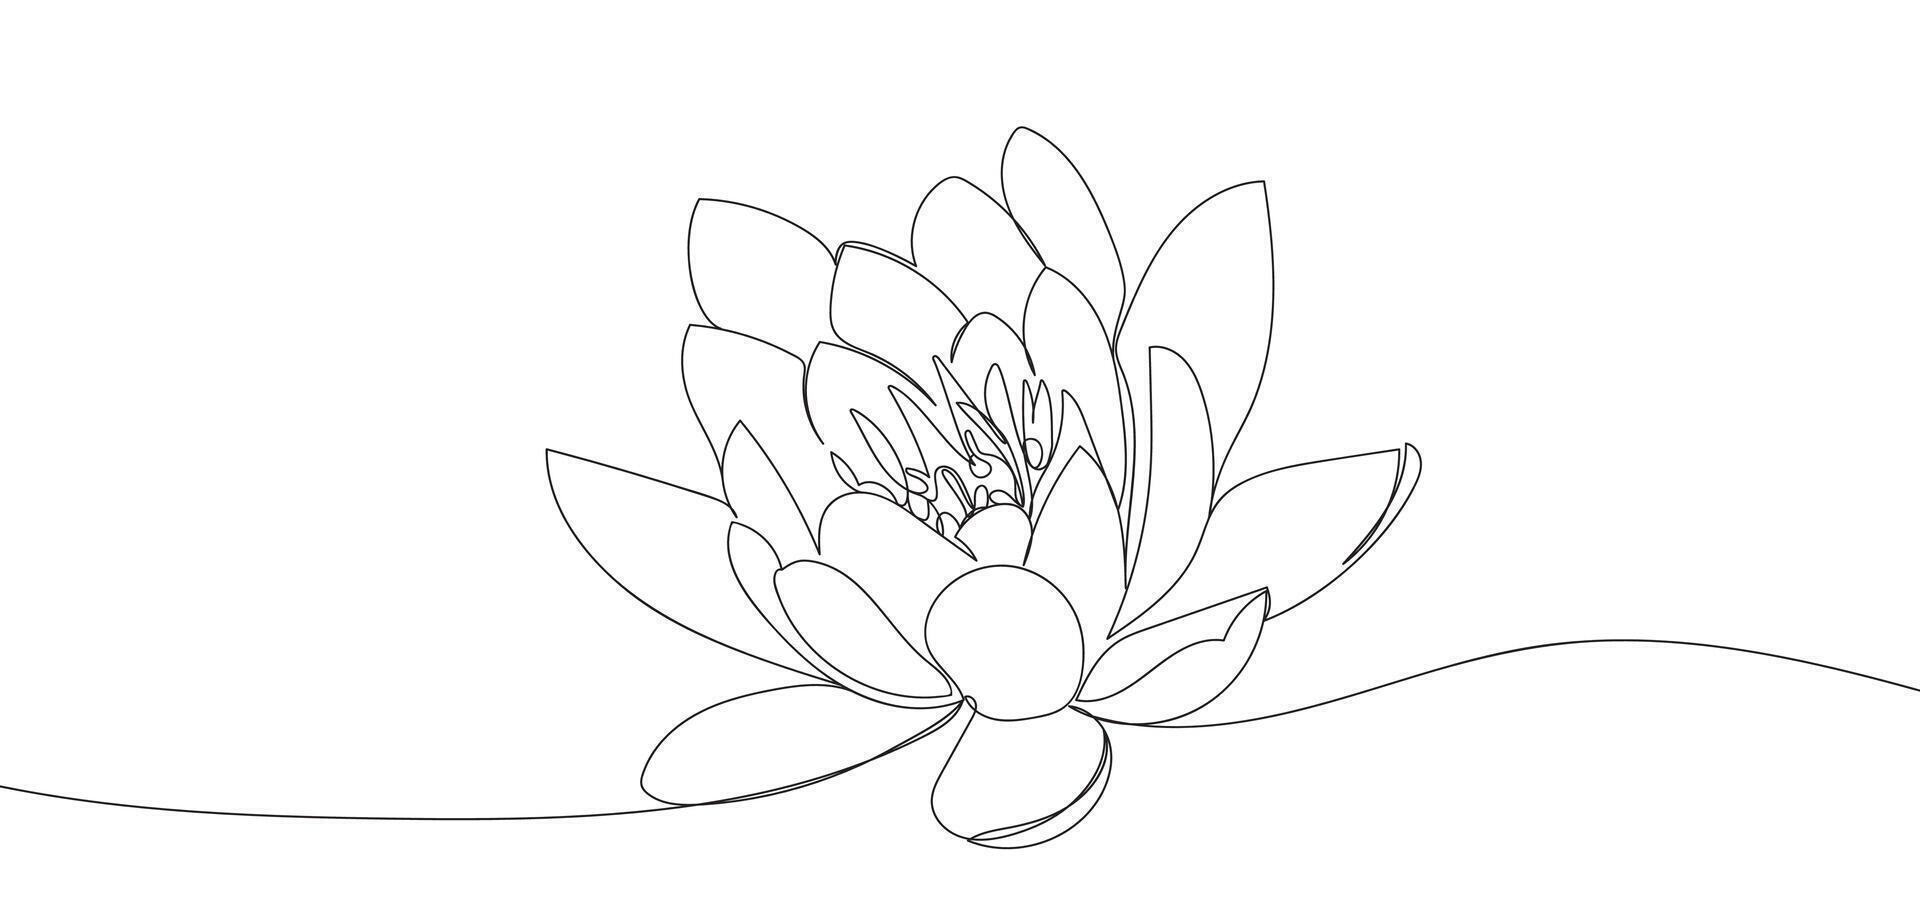 loto flor en soltero continuo línea dibujo estilo para logo o emblema. loto línea arte, contorno vector